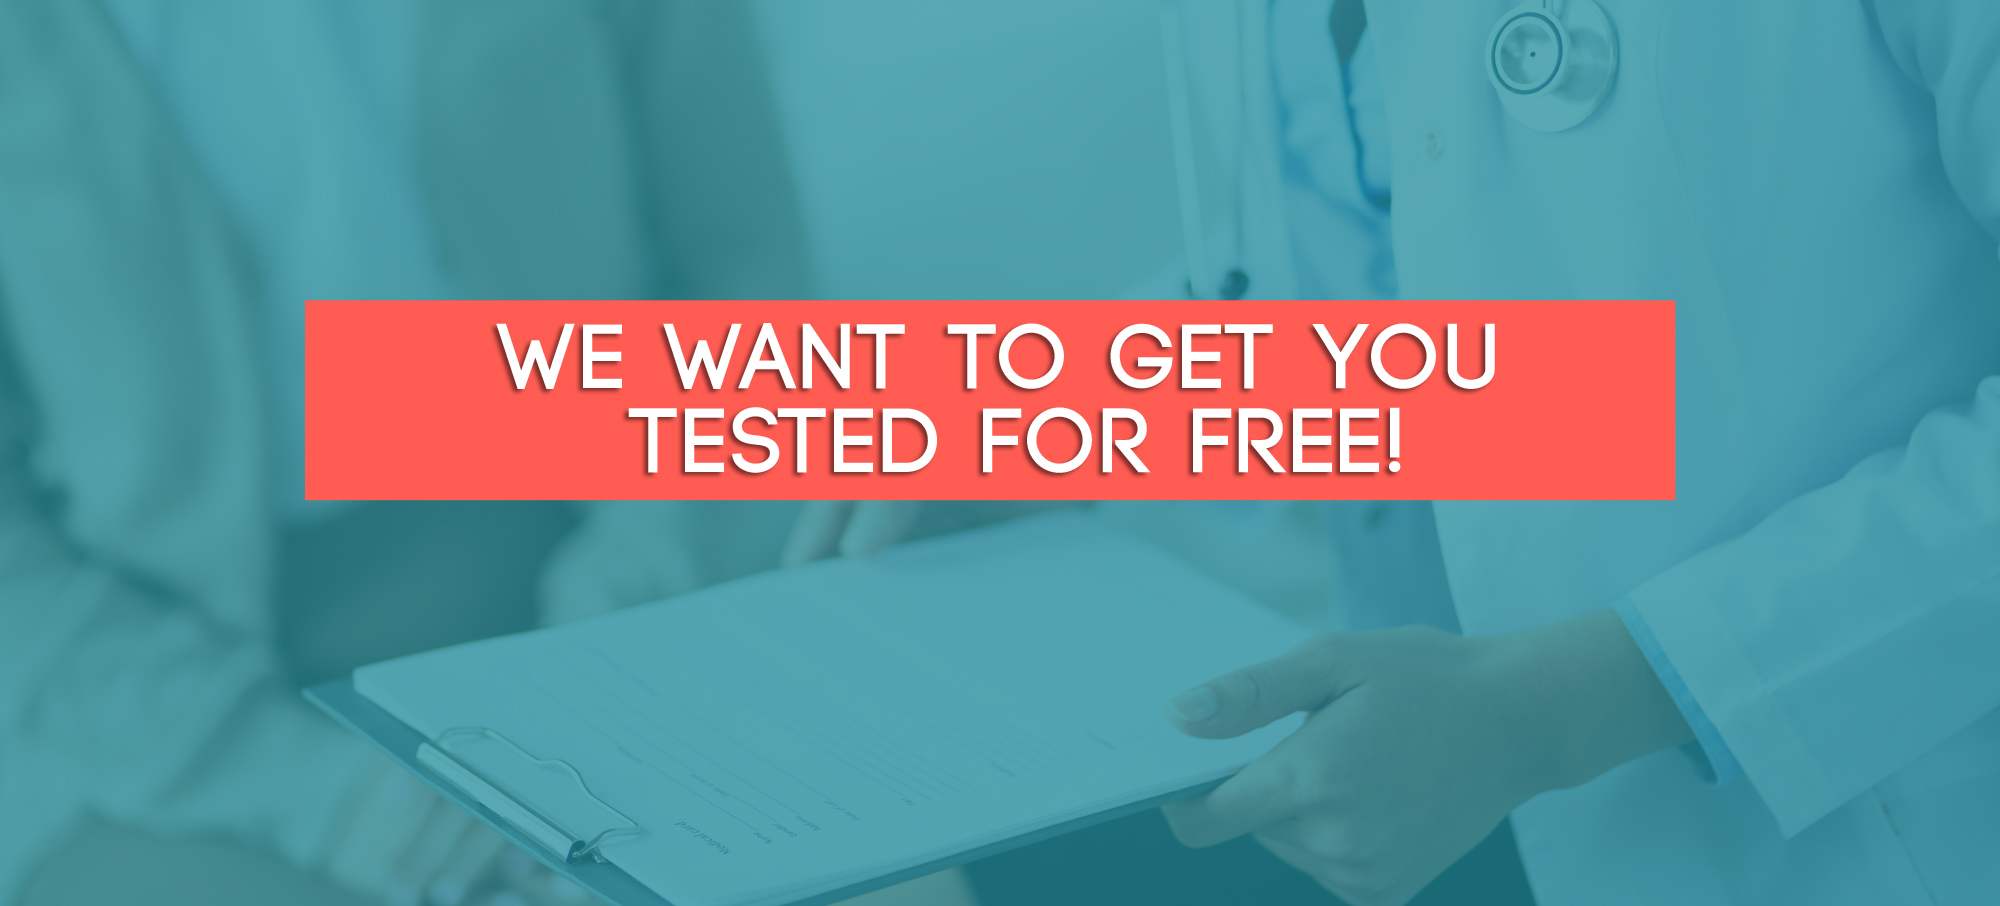 STD testing, Cheap, Free, Private, Secret, Confidential